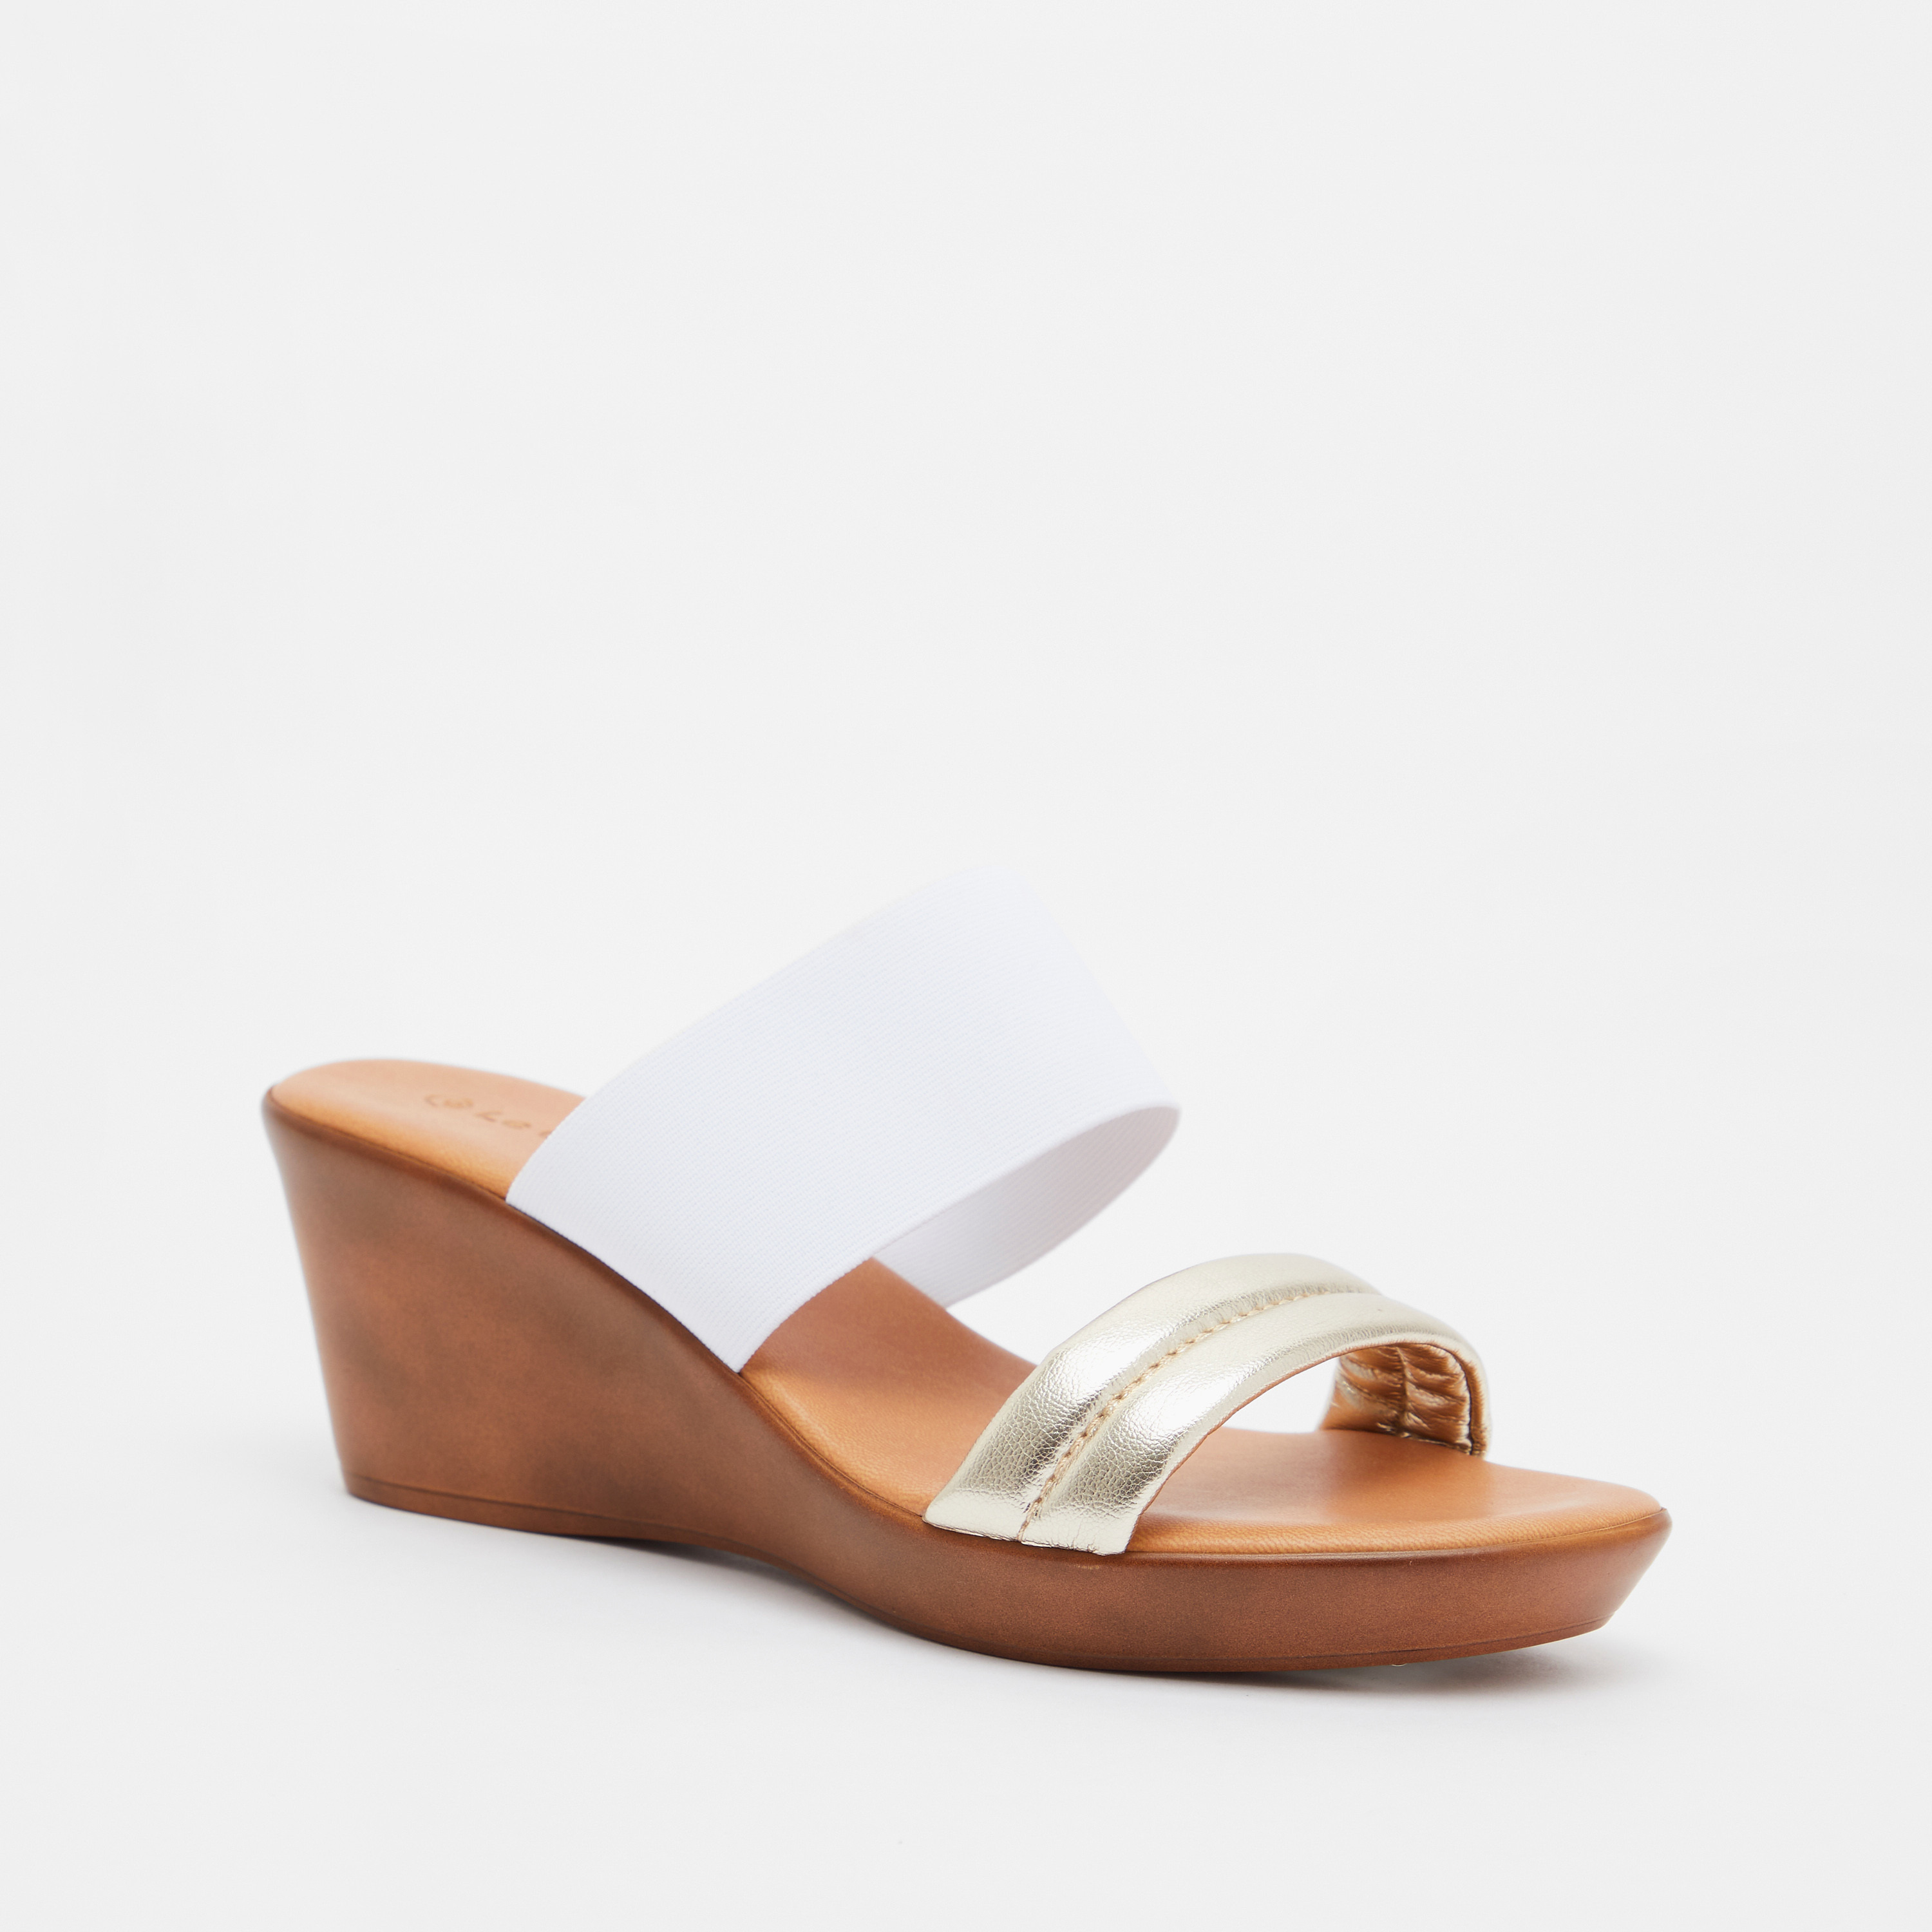 Shop Celeste Women's Pointed Toe Slip-On Shoes with Wedge Heels Online |  Splash UAE